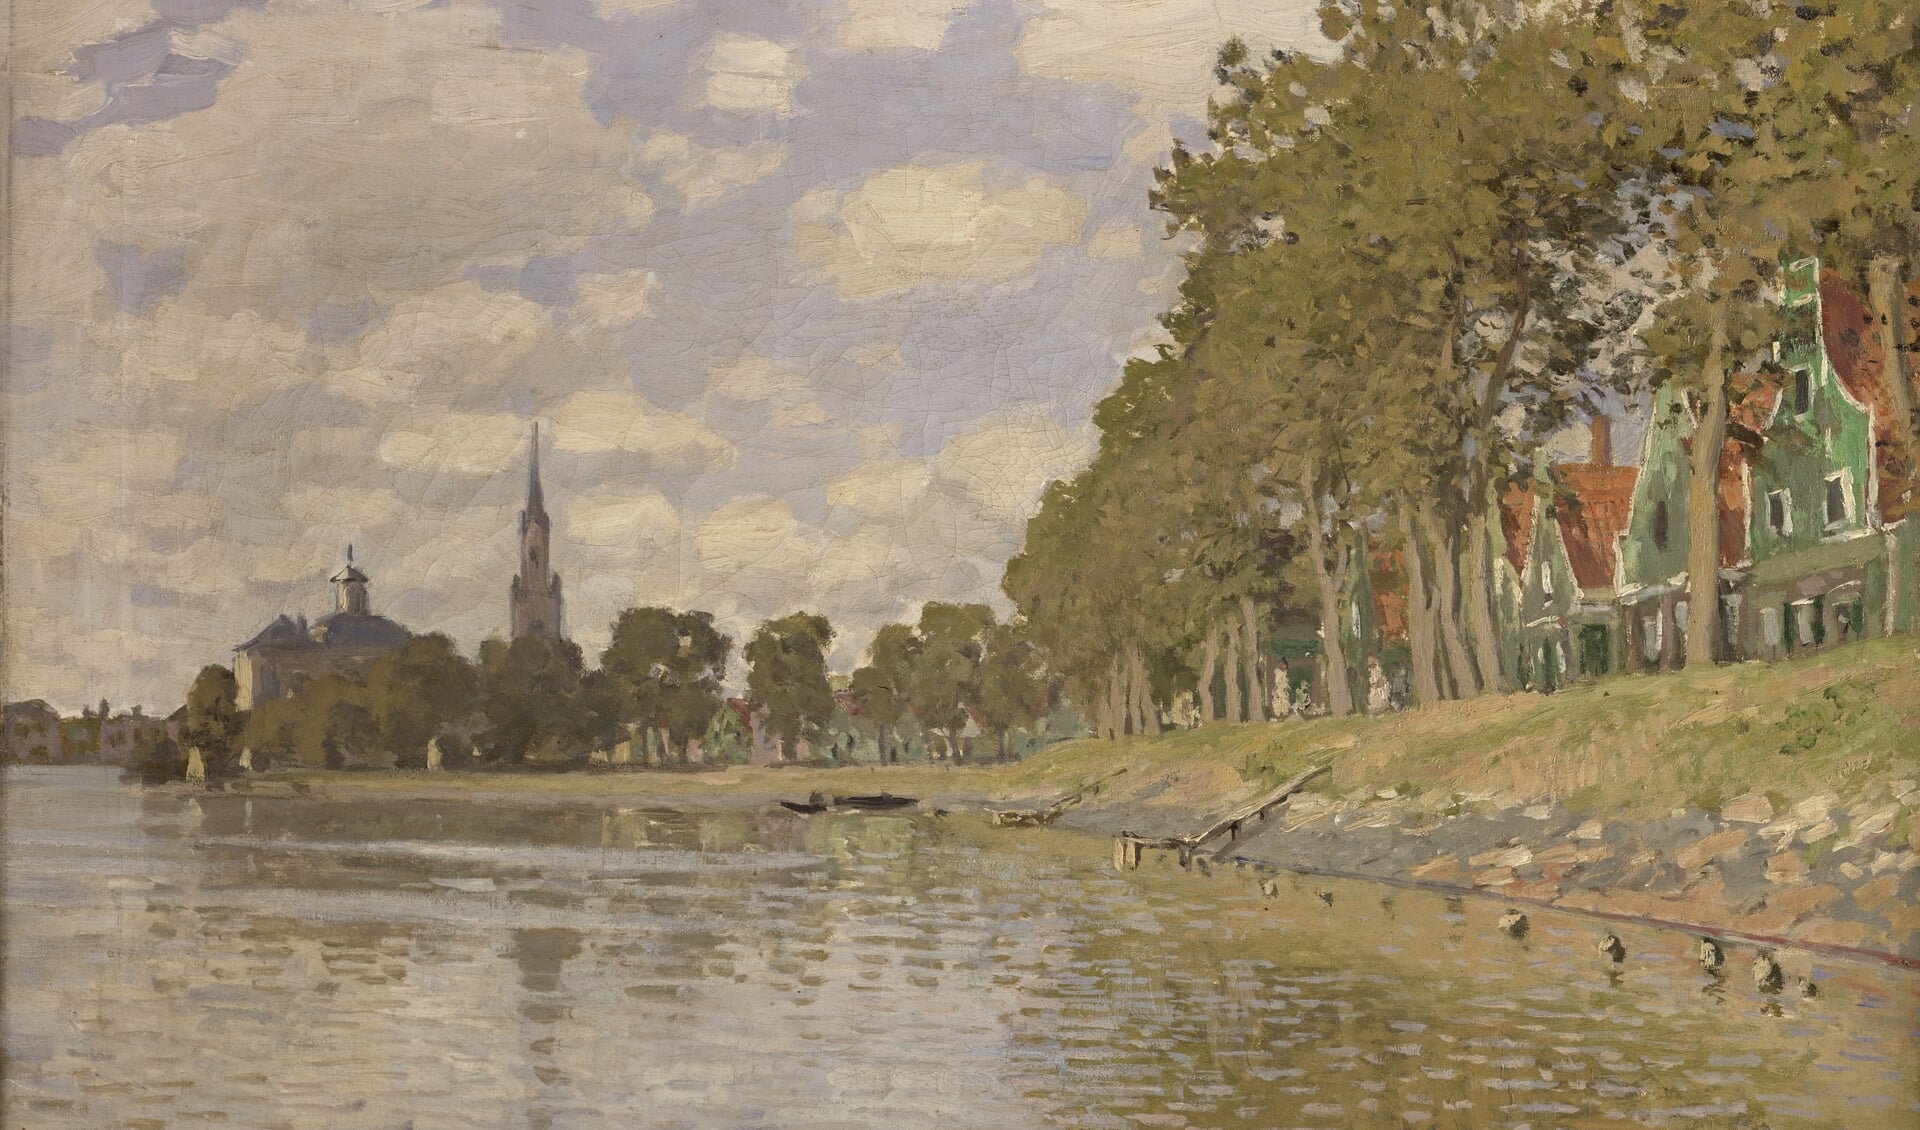 Zaandam (Holland) 1871 (oil on canvas) by Monet, Claude (1840-1926).